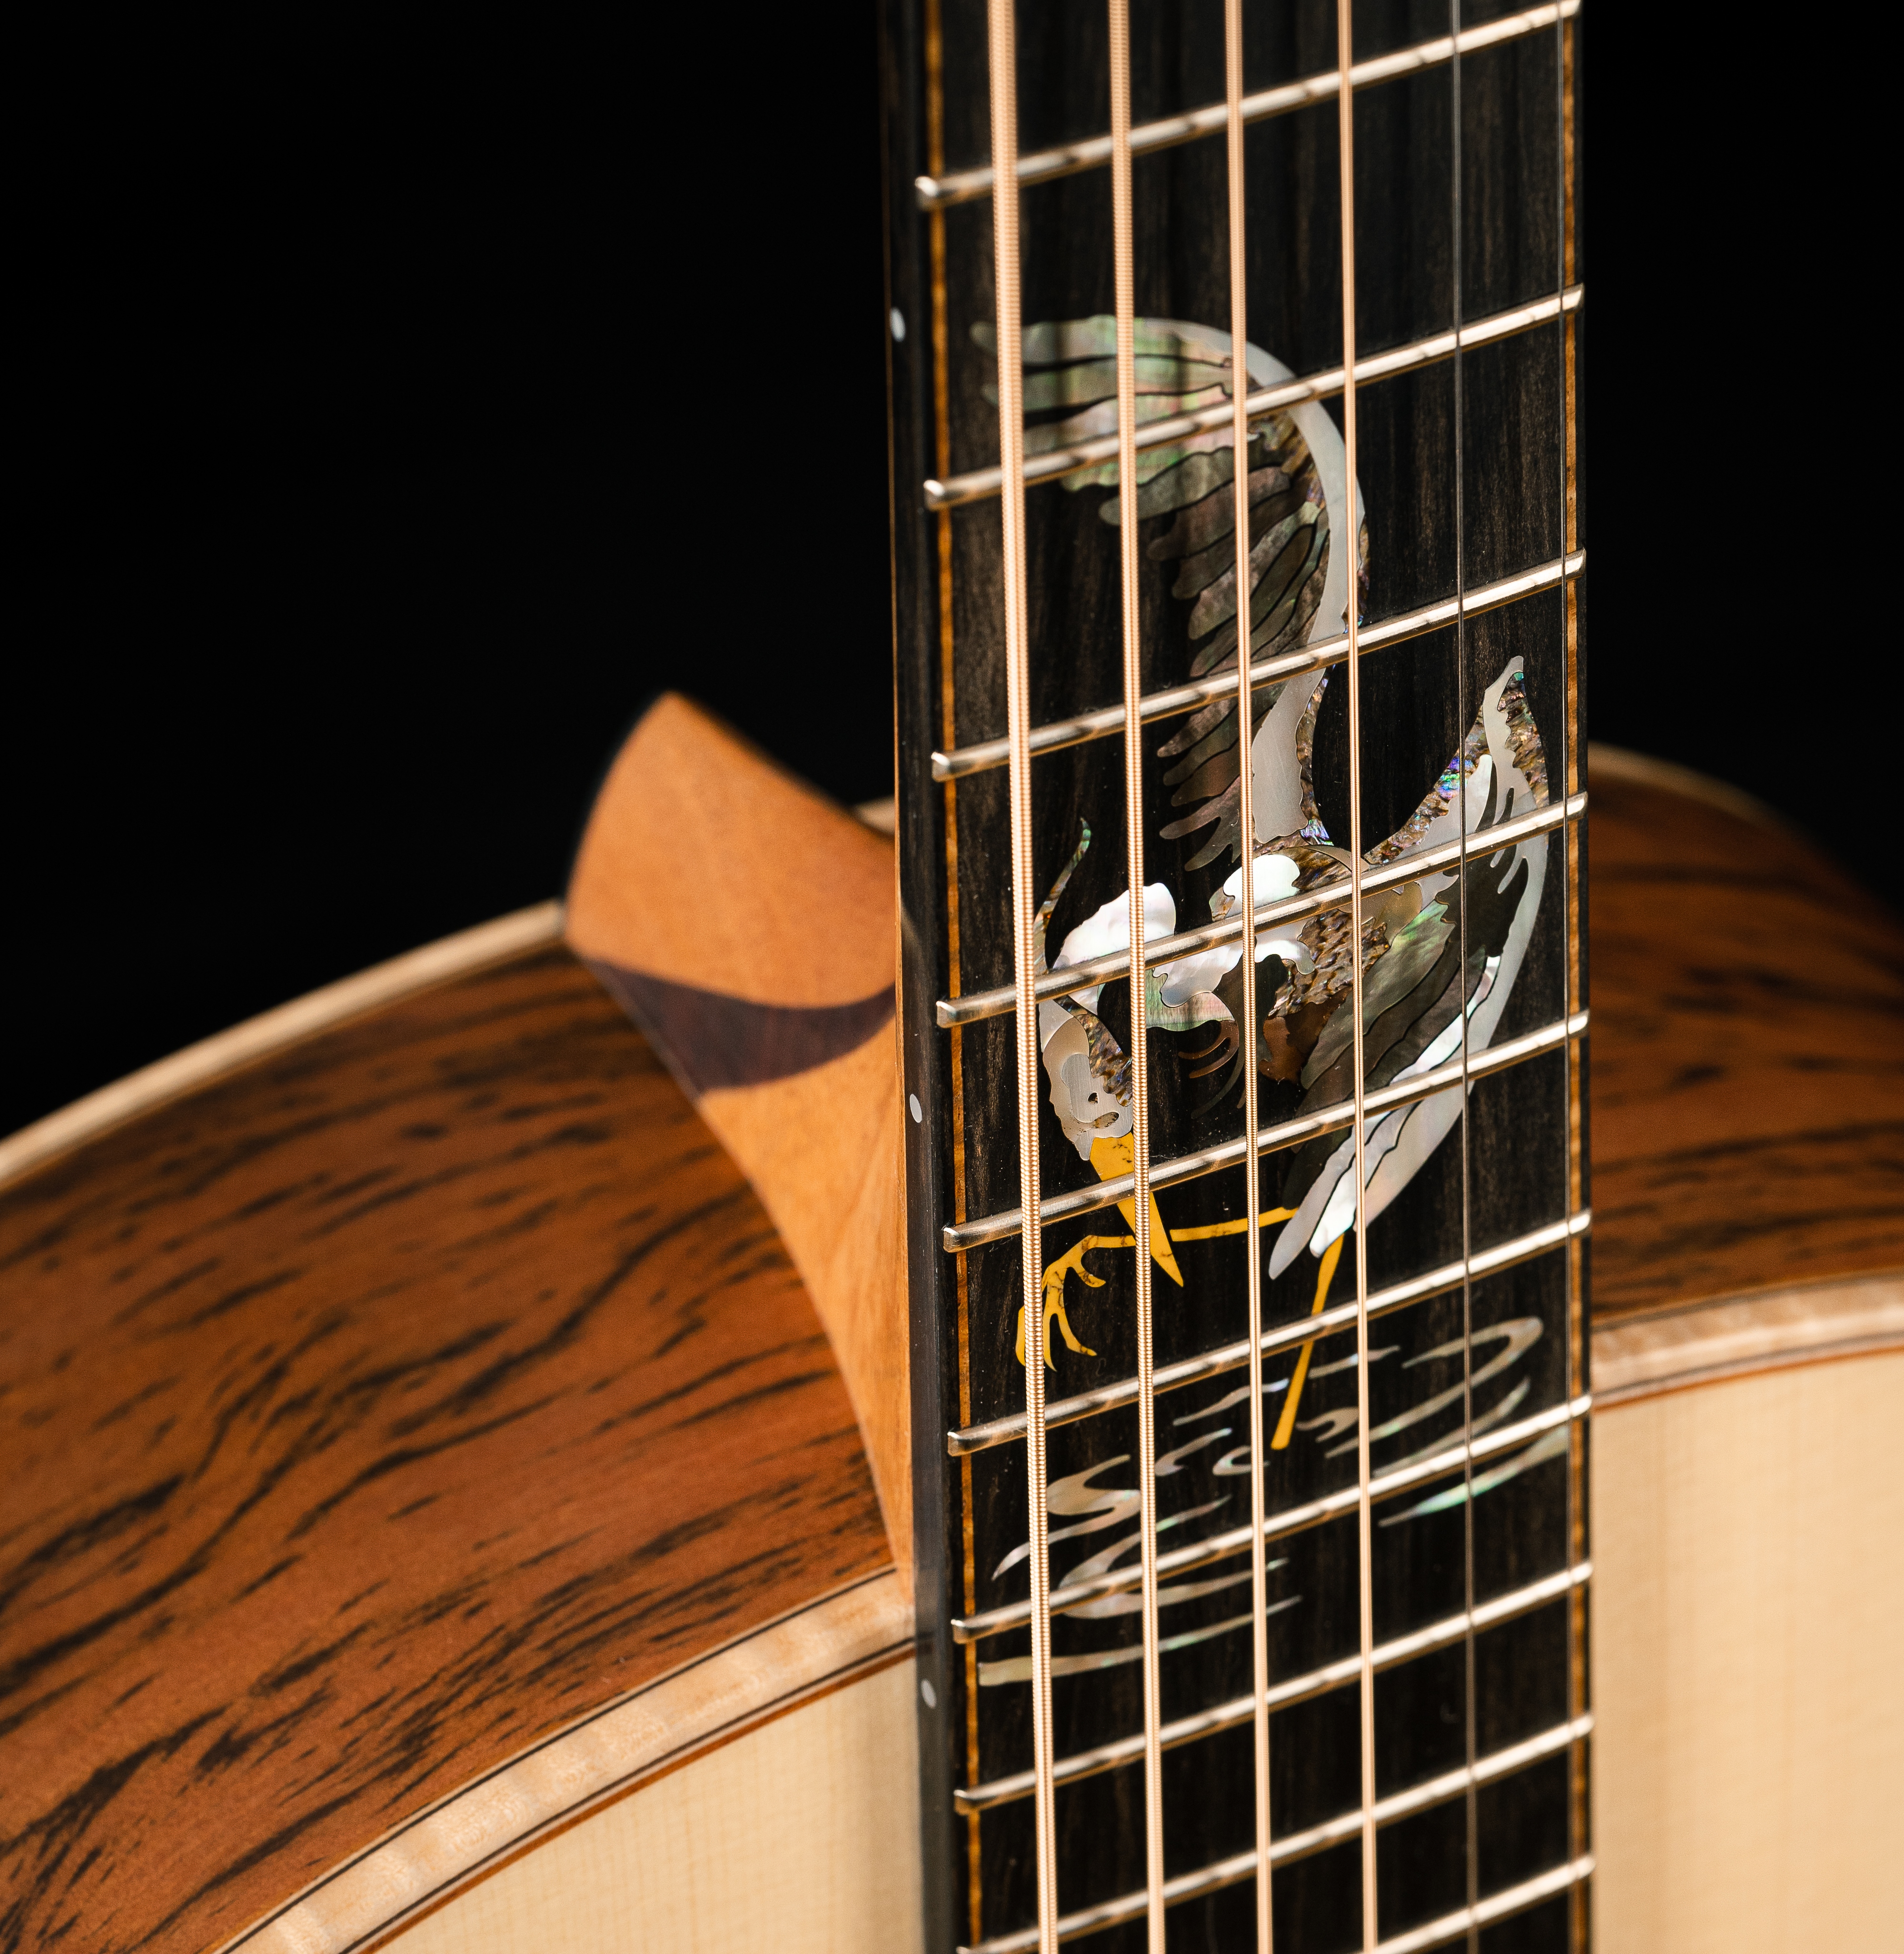 Bnineteenteam Fretboard Inlay,6mm Fretboard Inlay Dots Guitar Fretboard Inlay Abalone Shell Inlay for Guitar Ukulele Bass Mandolin Banjo Decor